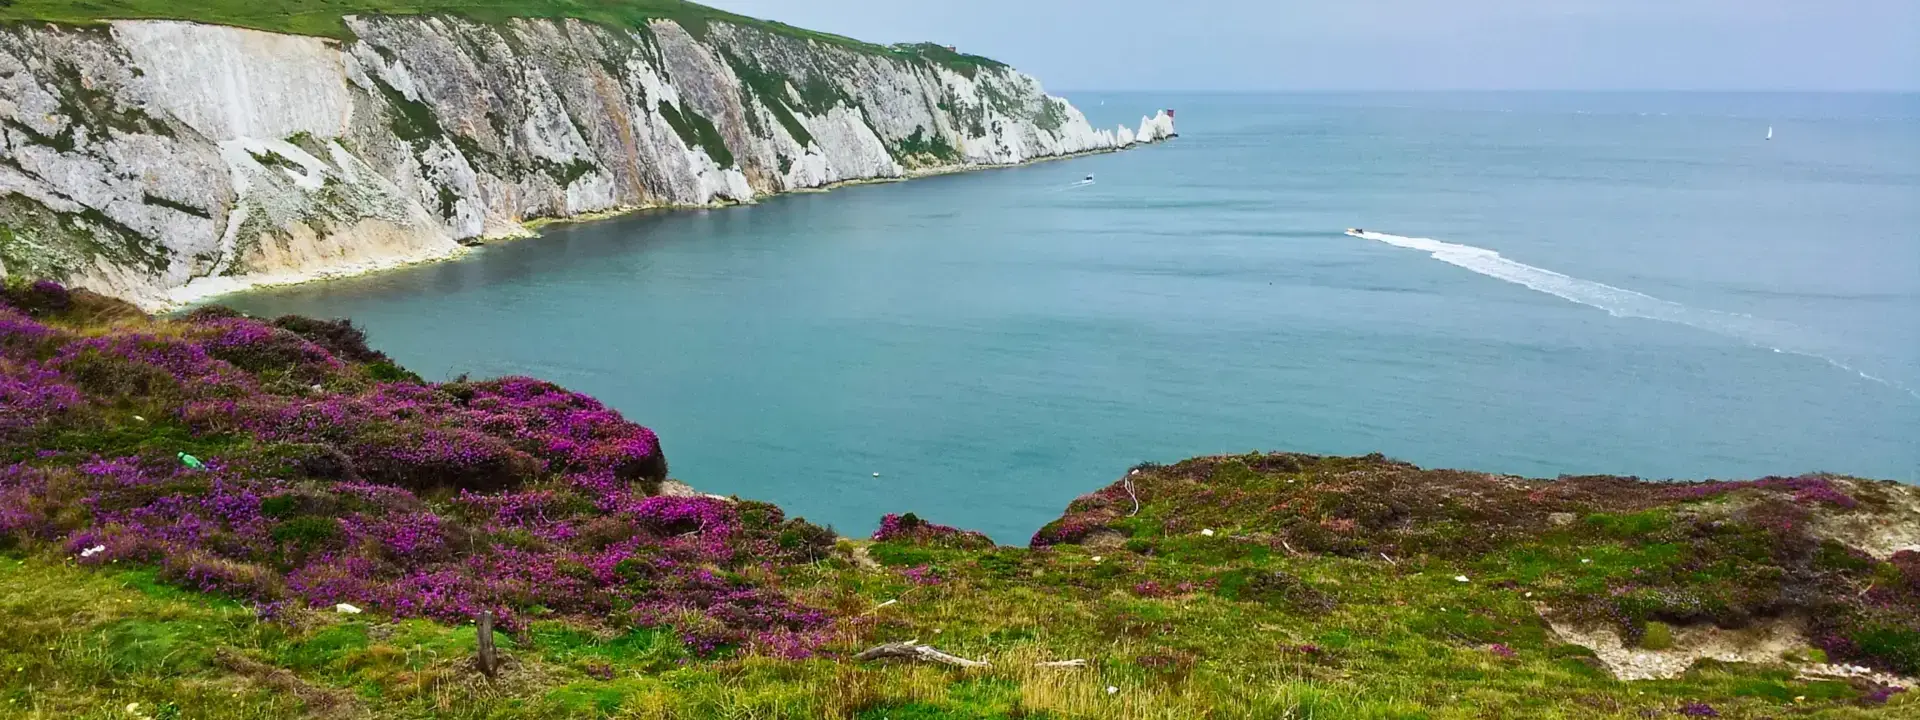 Isle of Wight United Kingdom